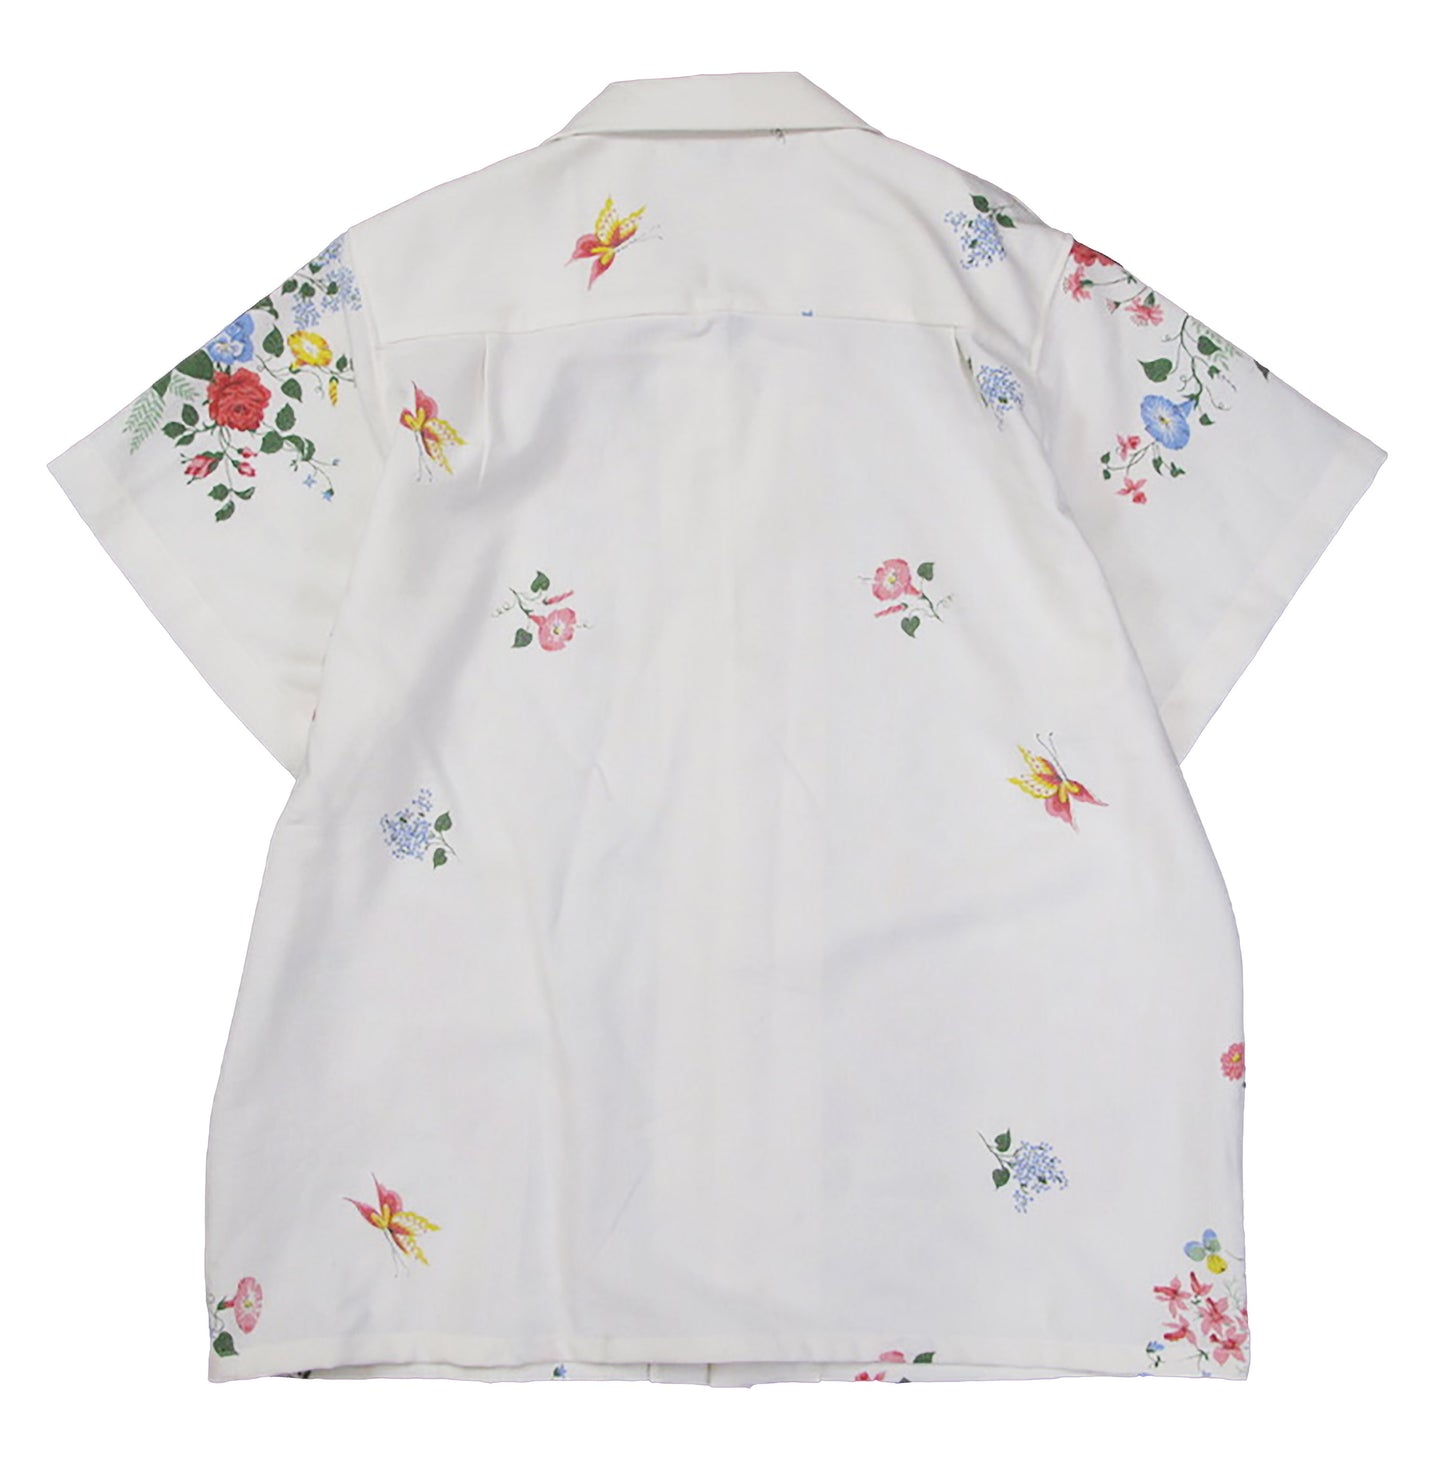 floral table cloth shirt